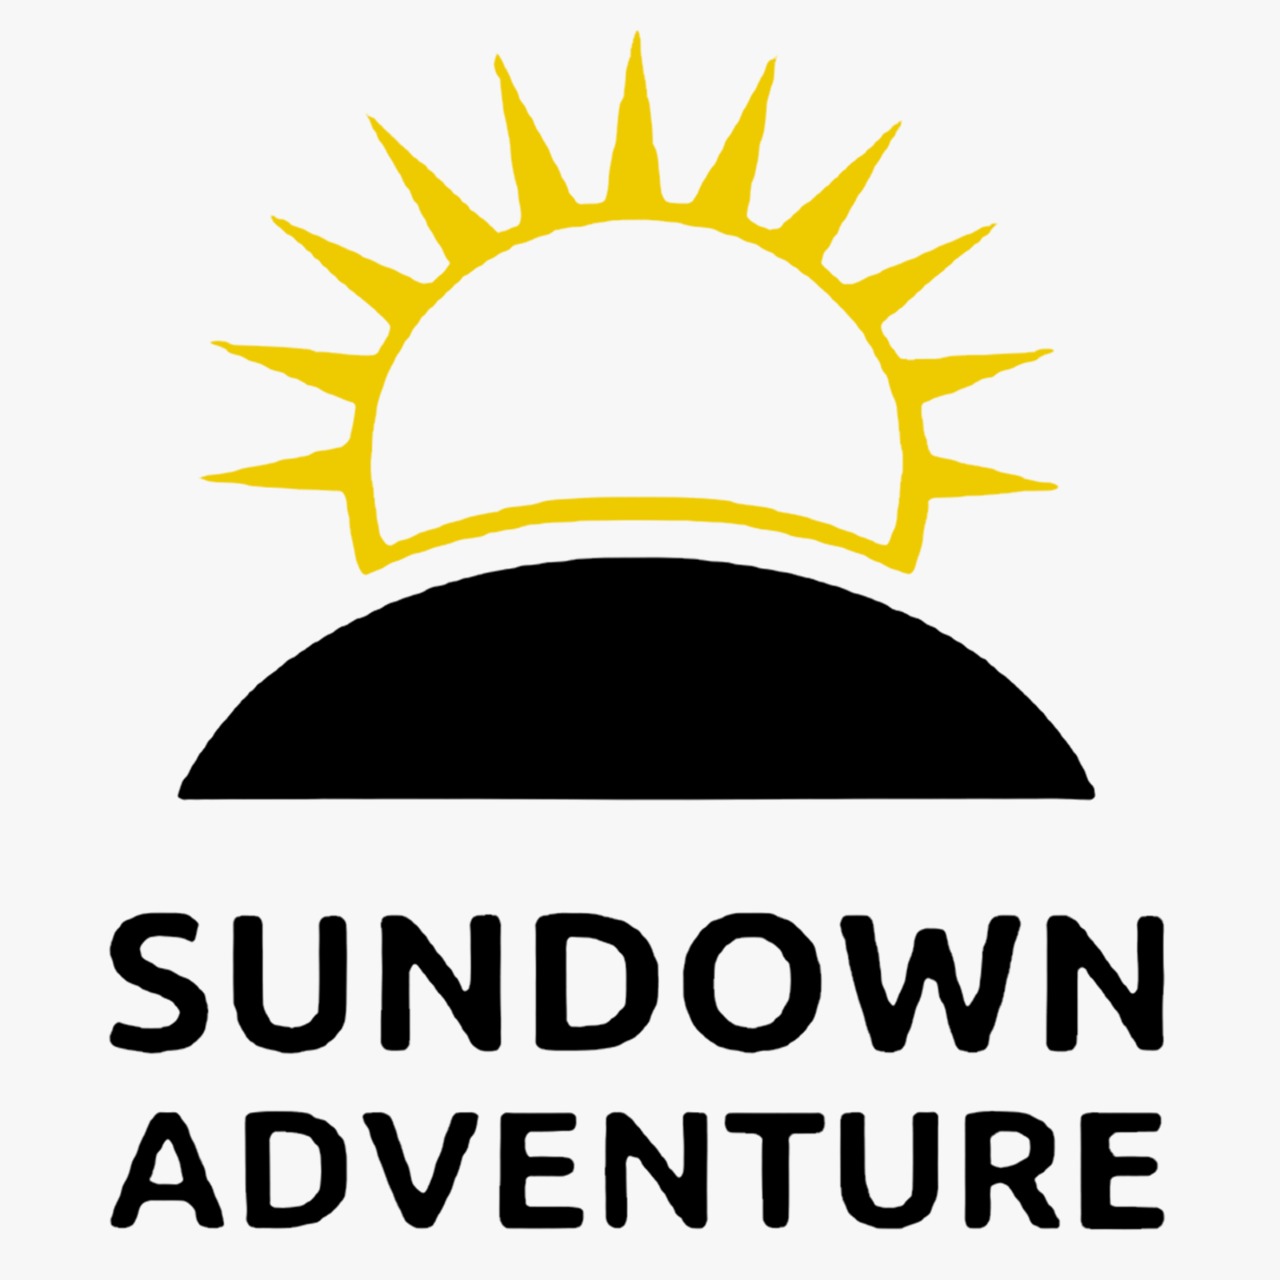 Sundown Adventure: Popular Travel Blogs 2022